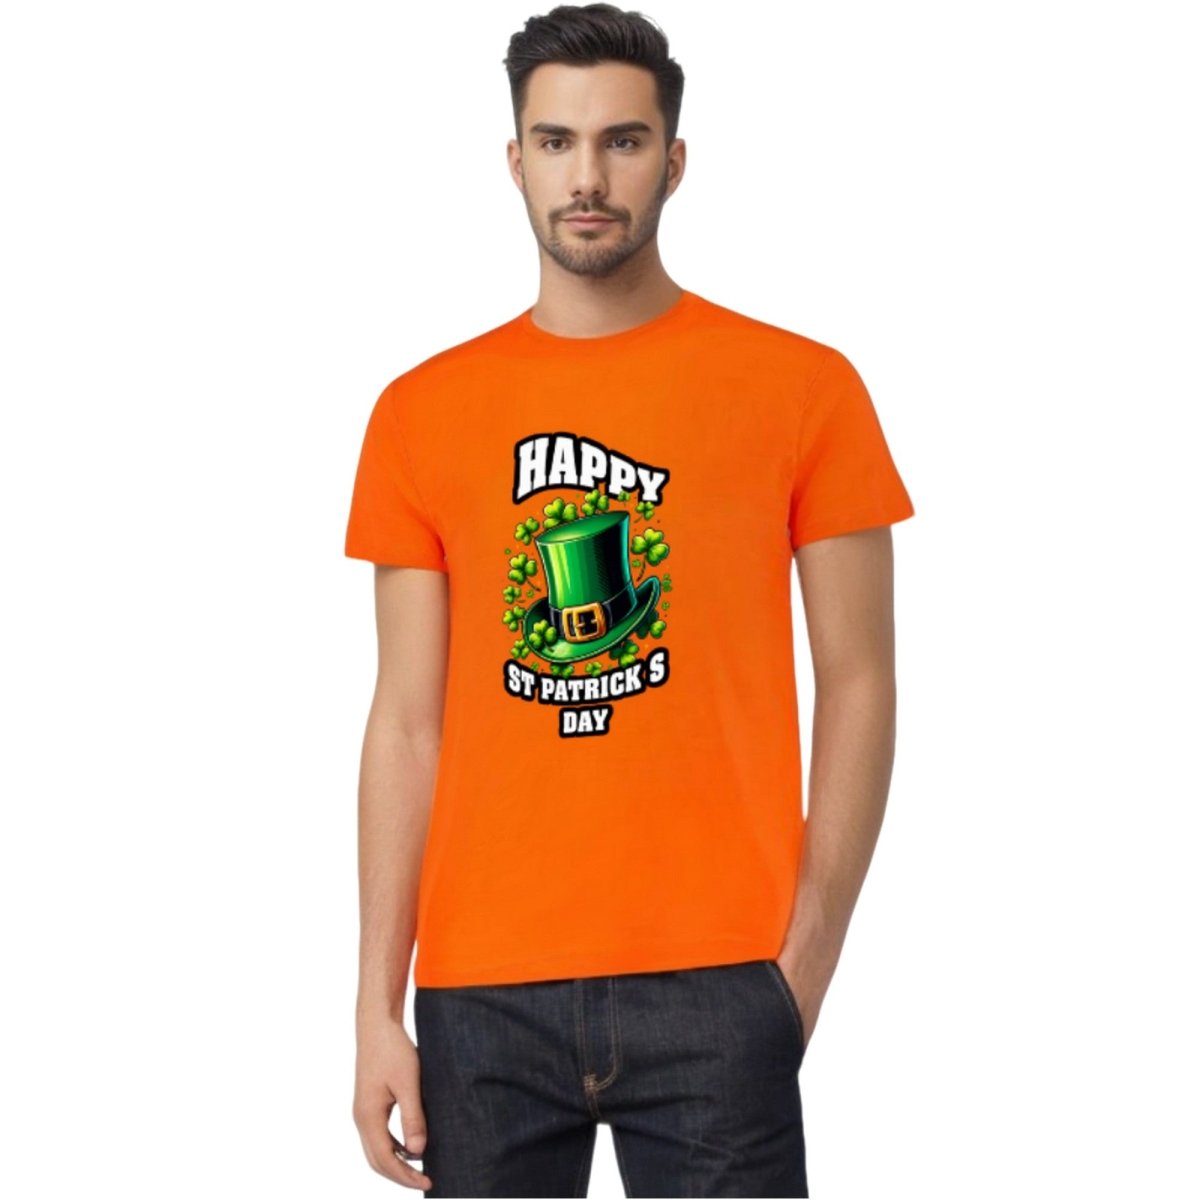 Happy St. Patrick's Day" Orange T-Shirt with Top Hat Design - Mardi Gras Apparel